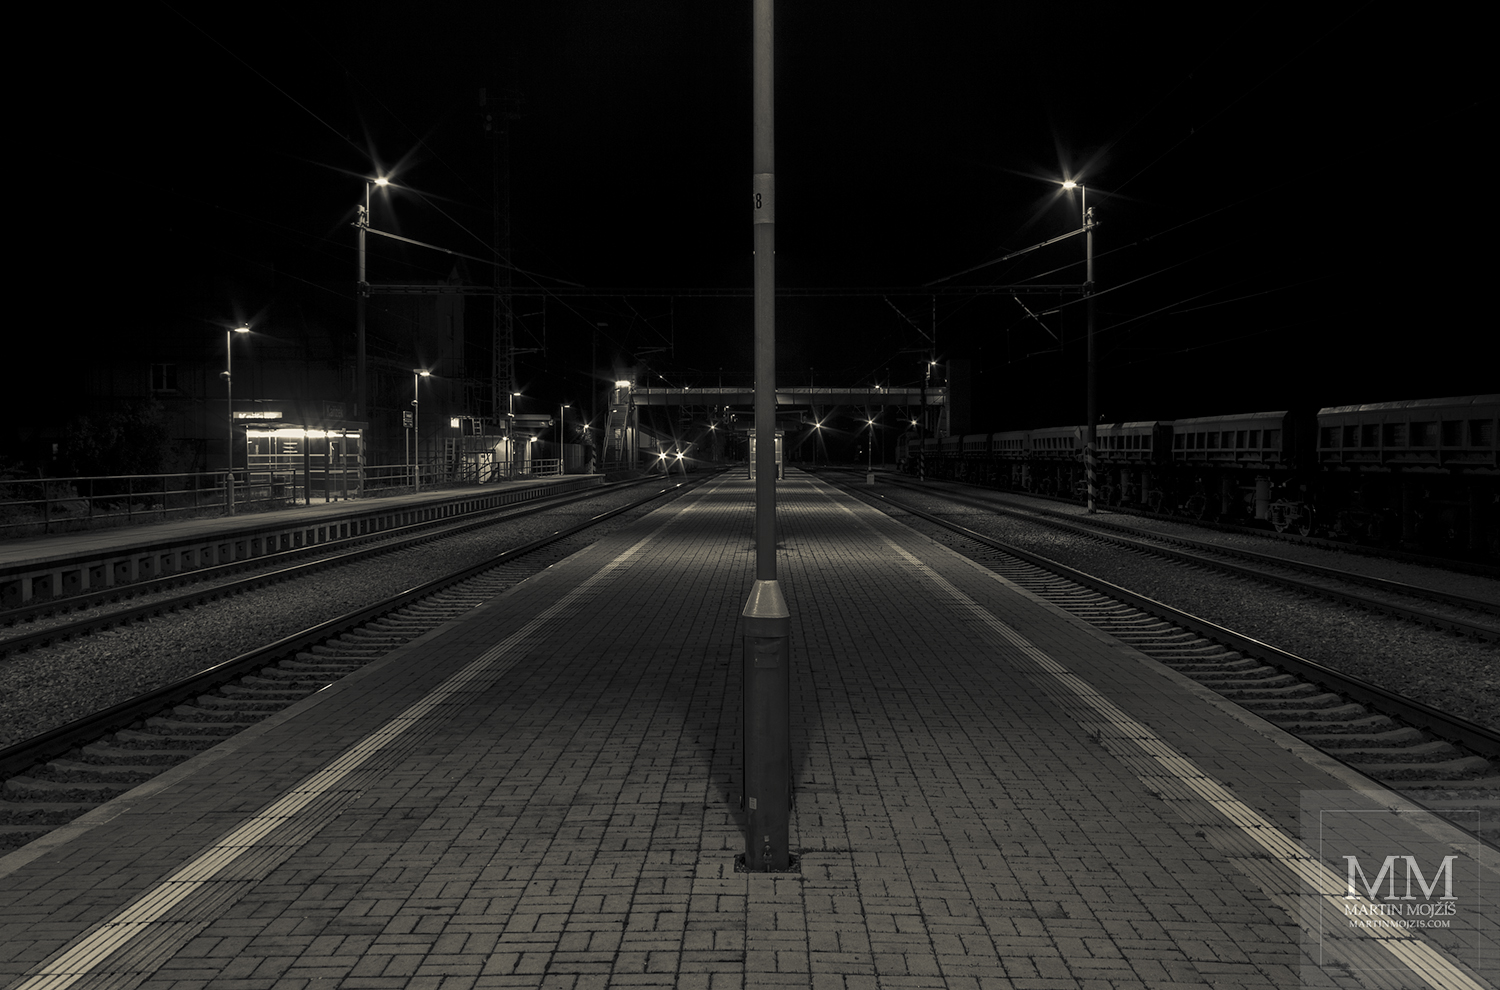 The platform. Karizek railway station at night.